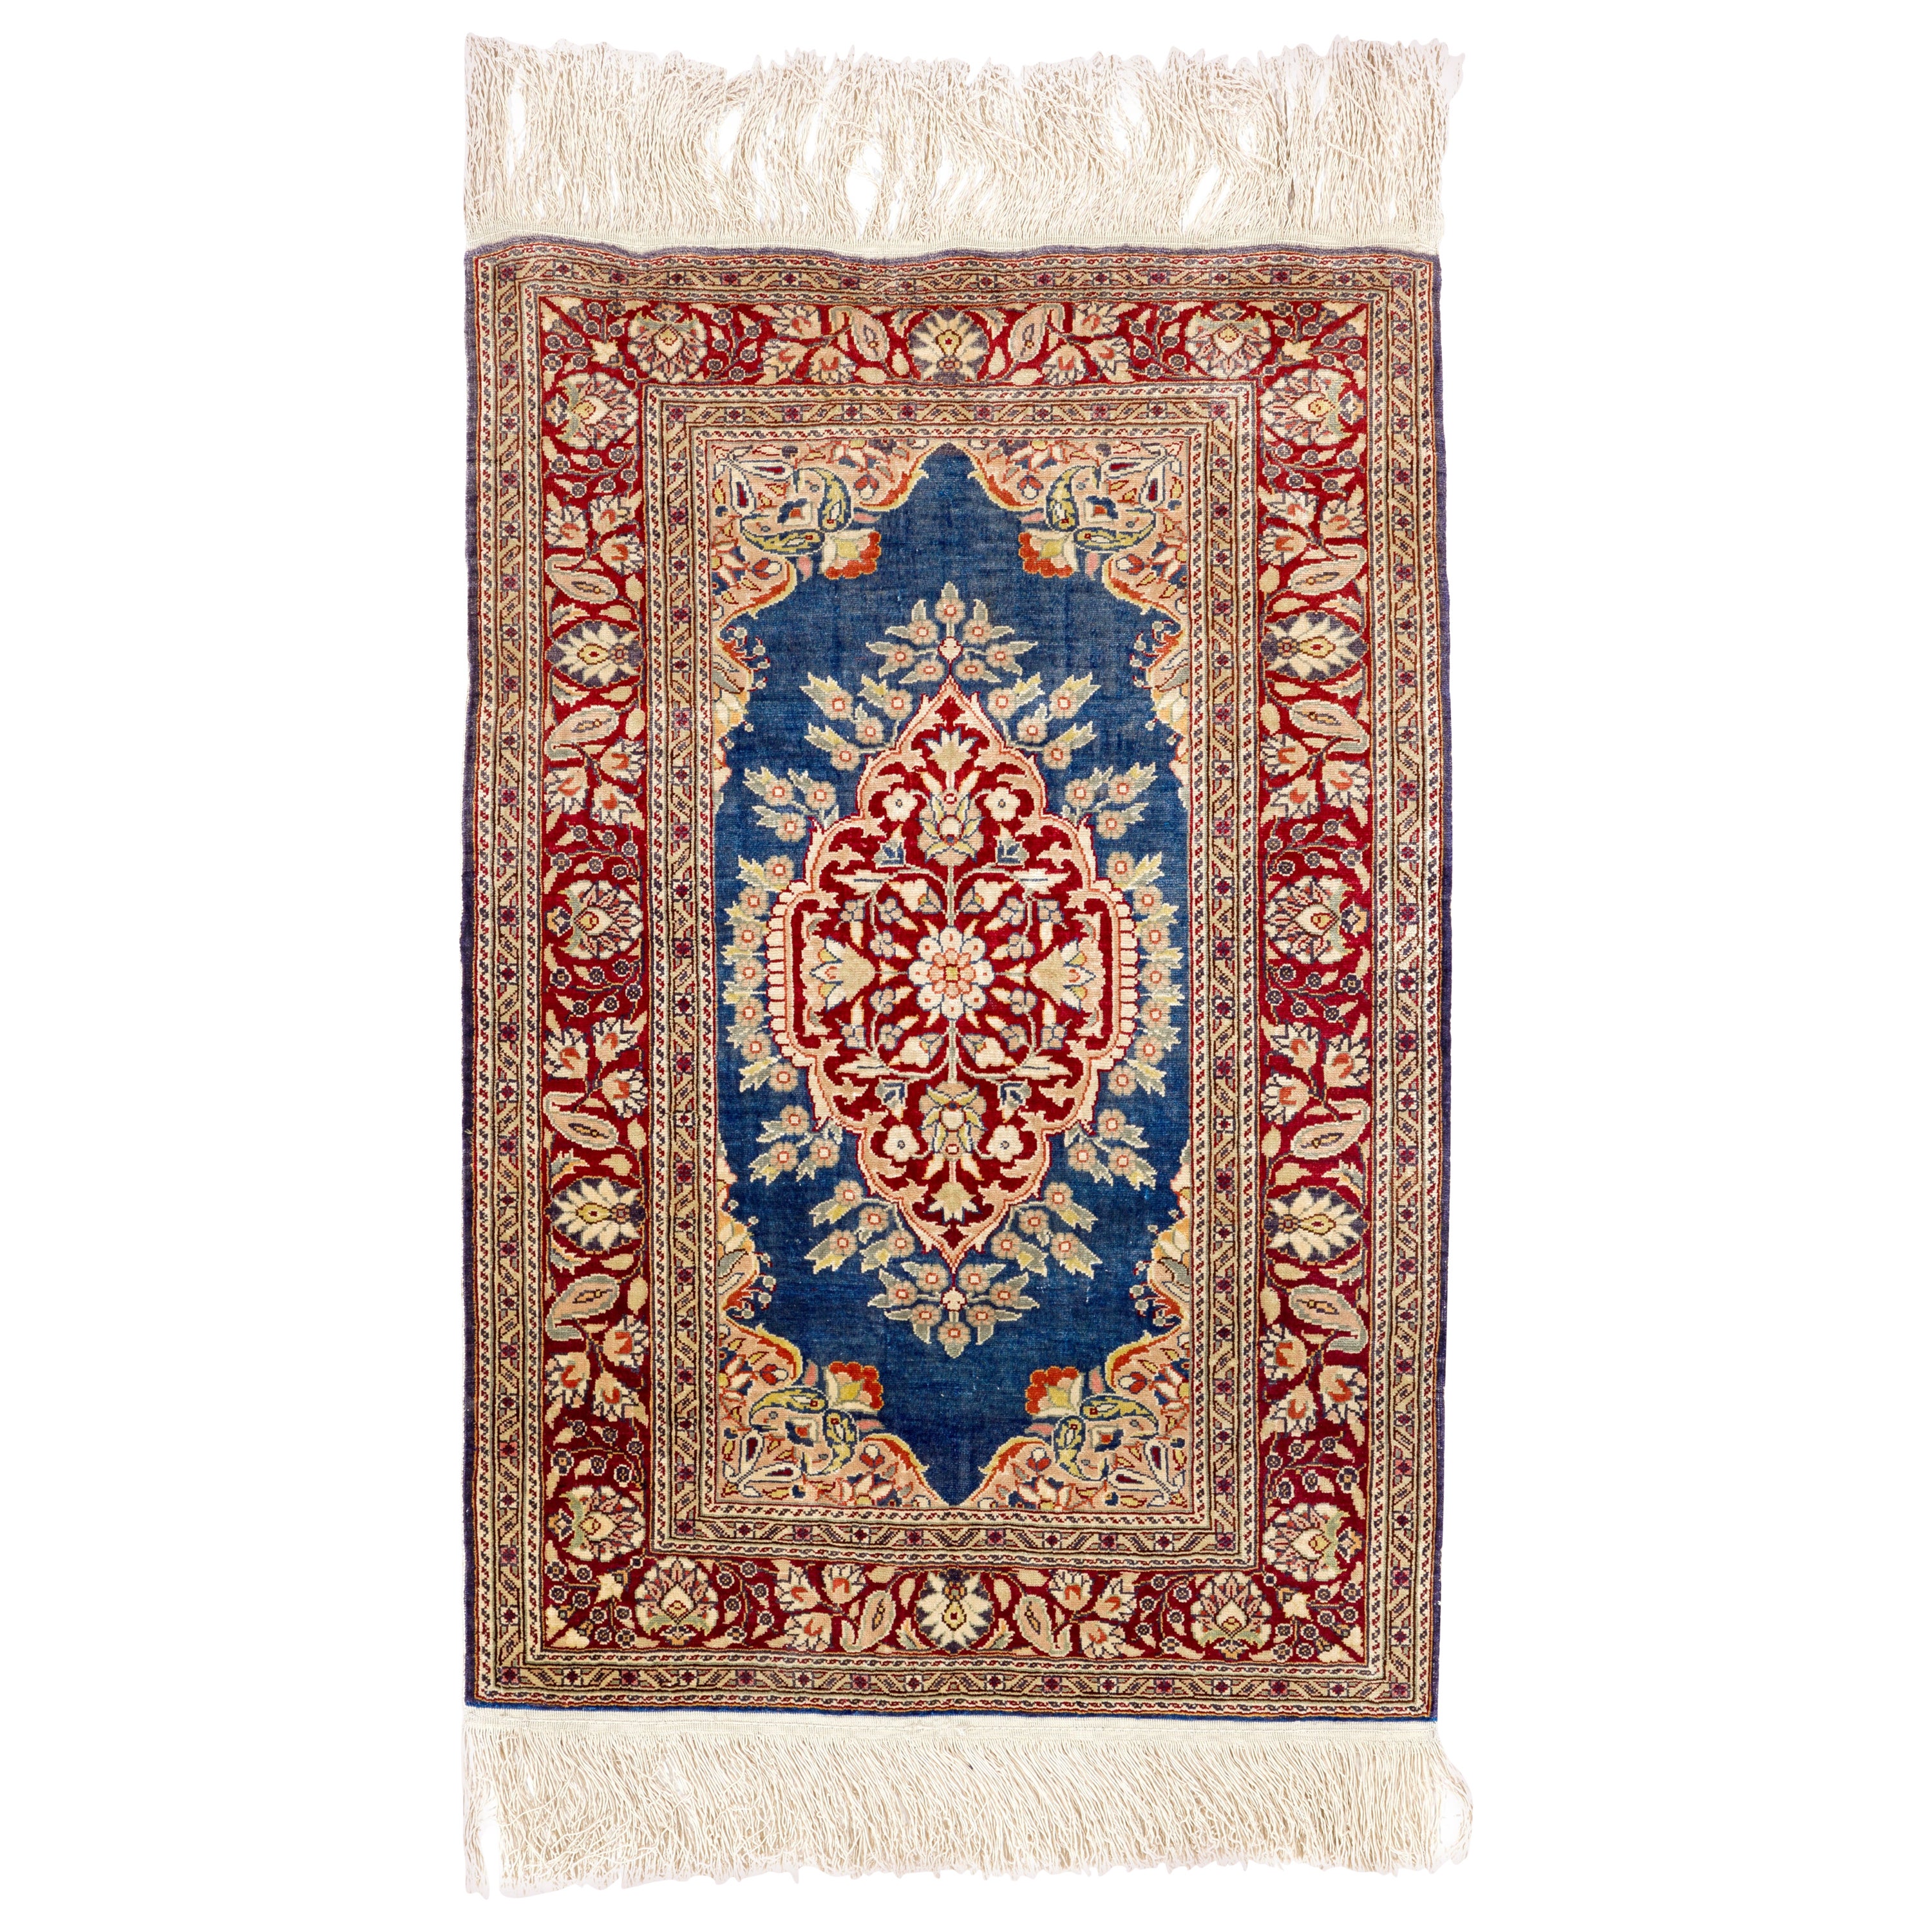 100% Silk Vintage Turkish Kayseri Accent Rug, Handmade Wall Hanging. 2x3 Ft